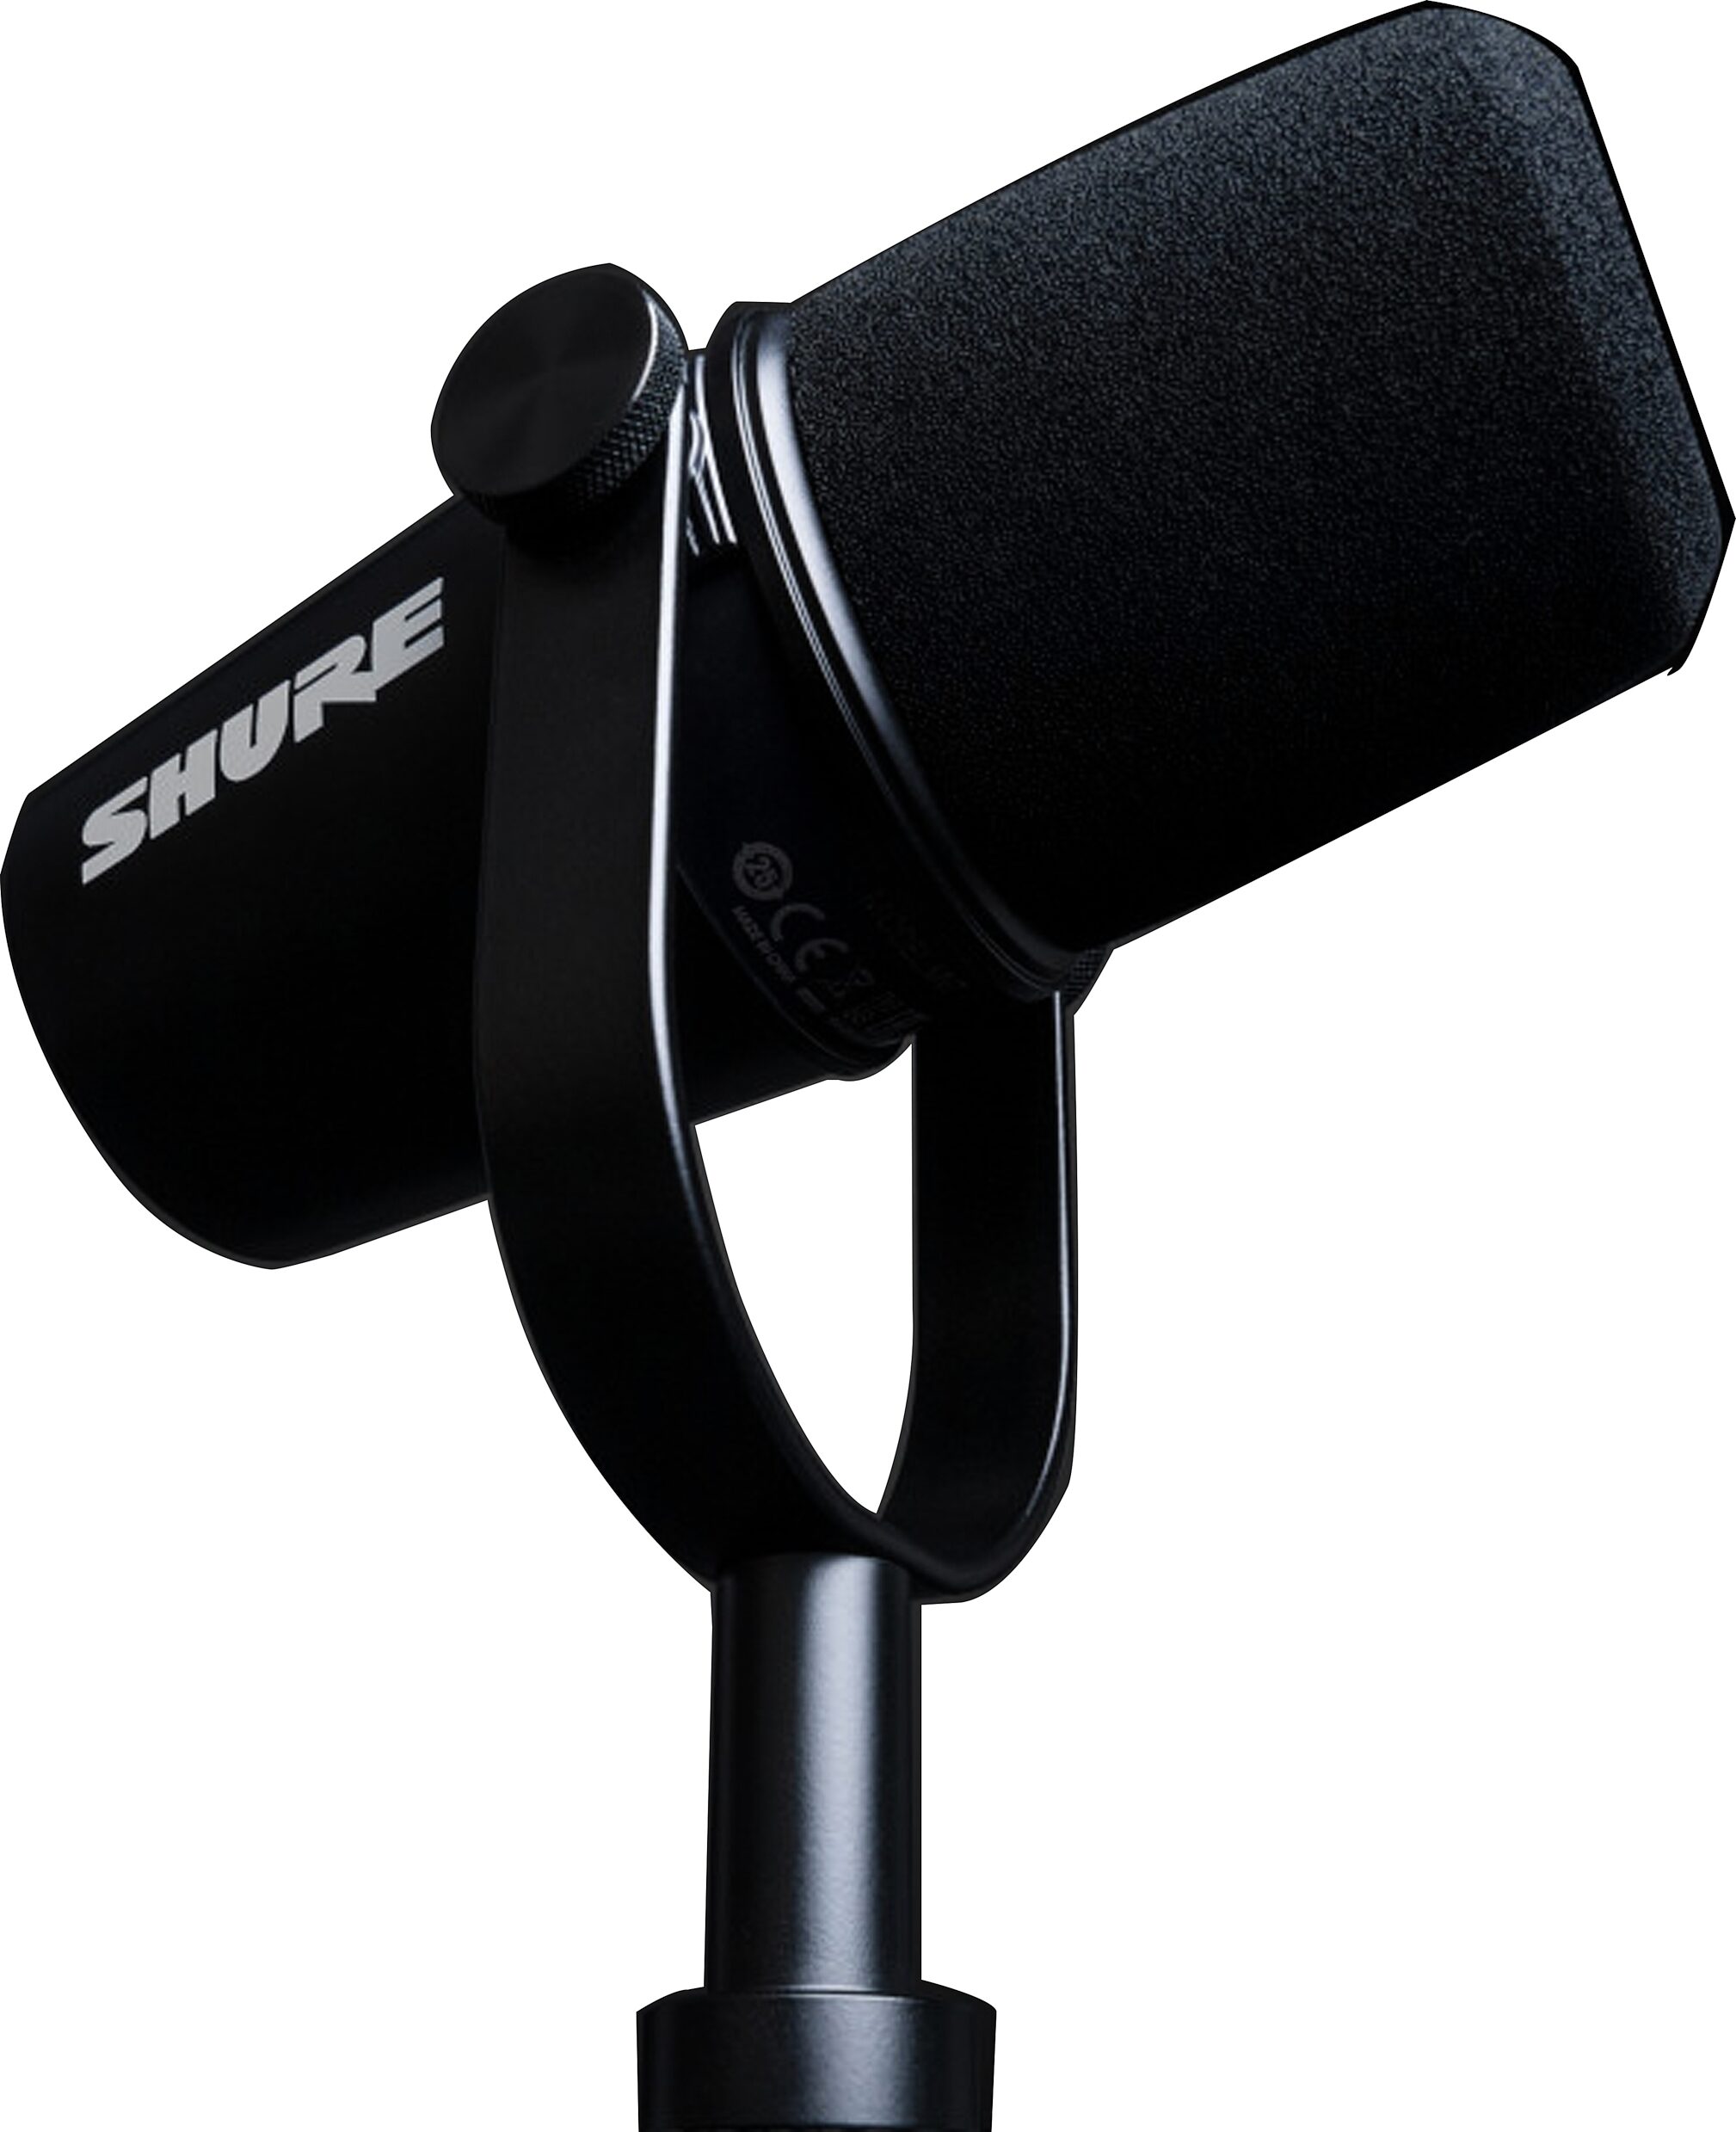 Shure MV7 Podcast Microphone With Mini Tripod (MV7-K-BNDL)